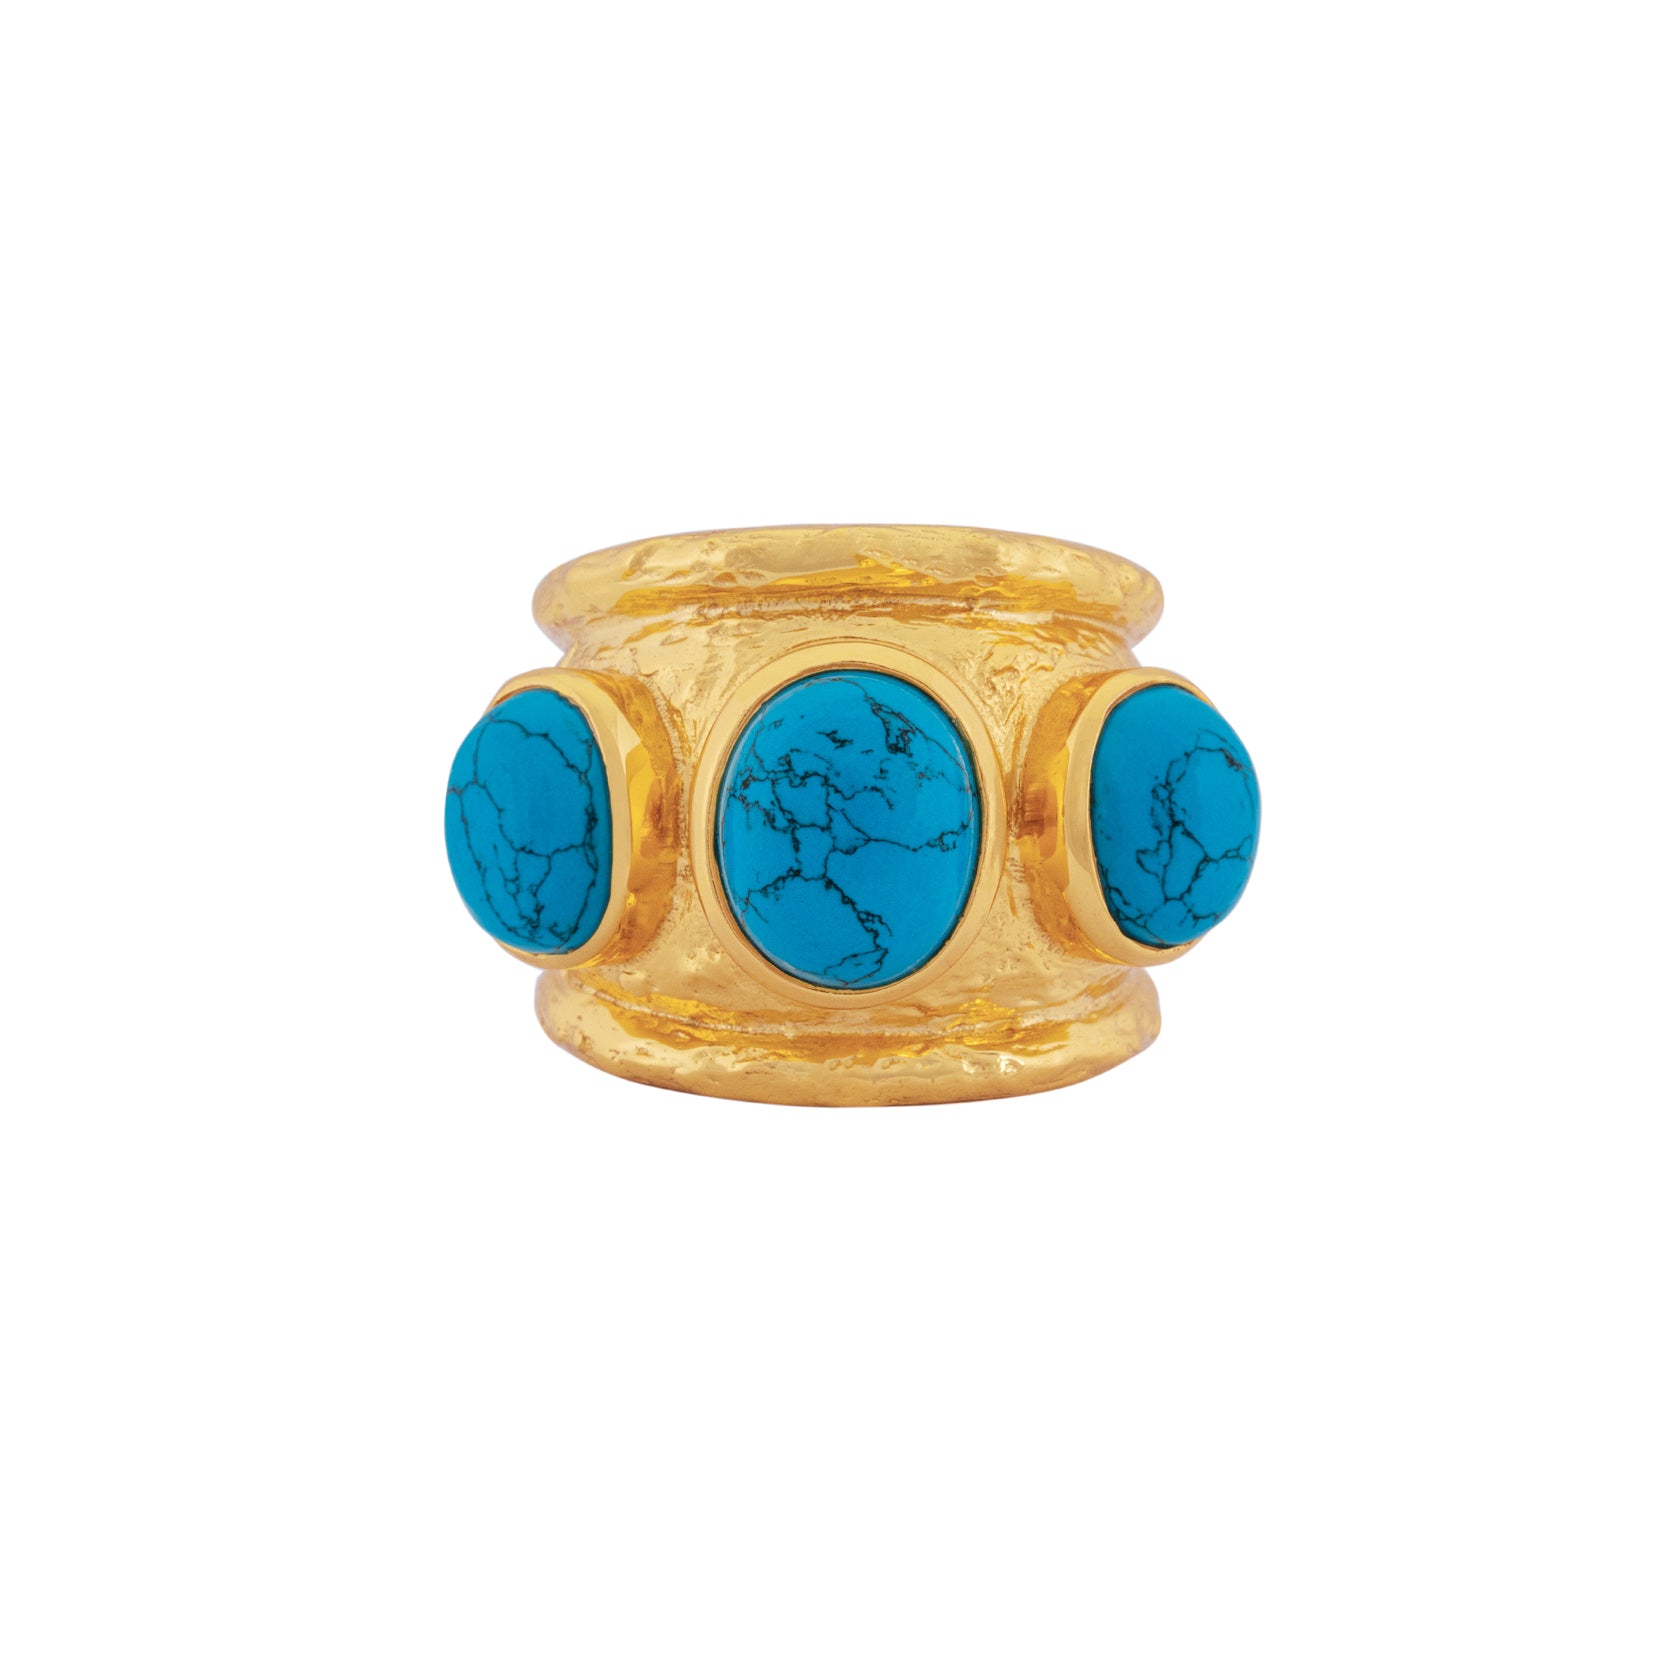 Nova Ring Blue Turquoise